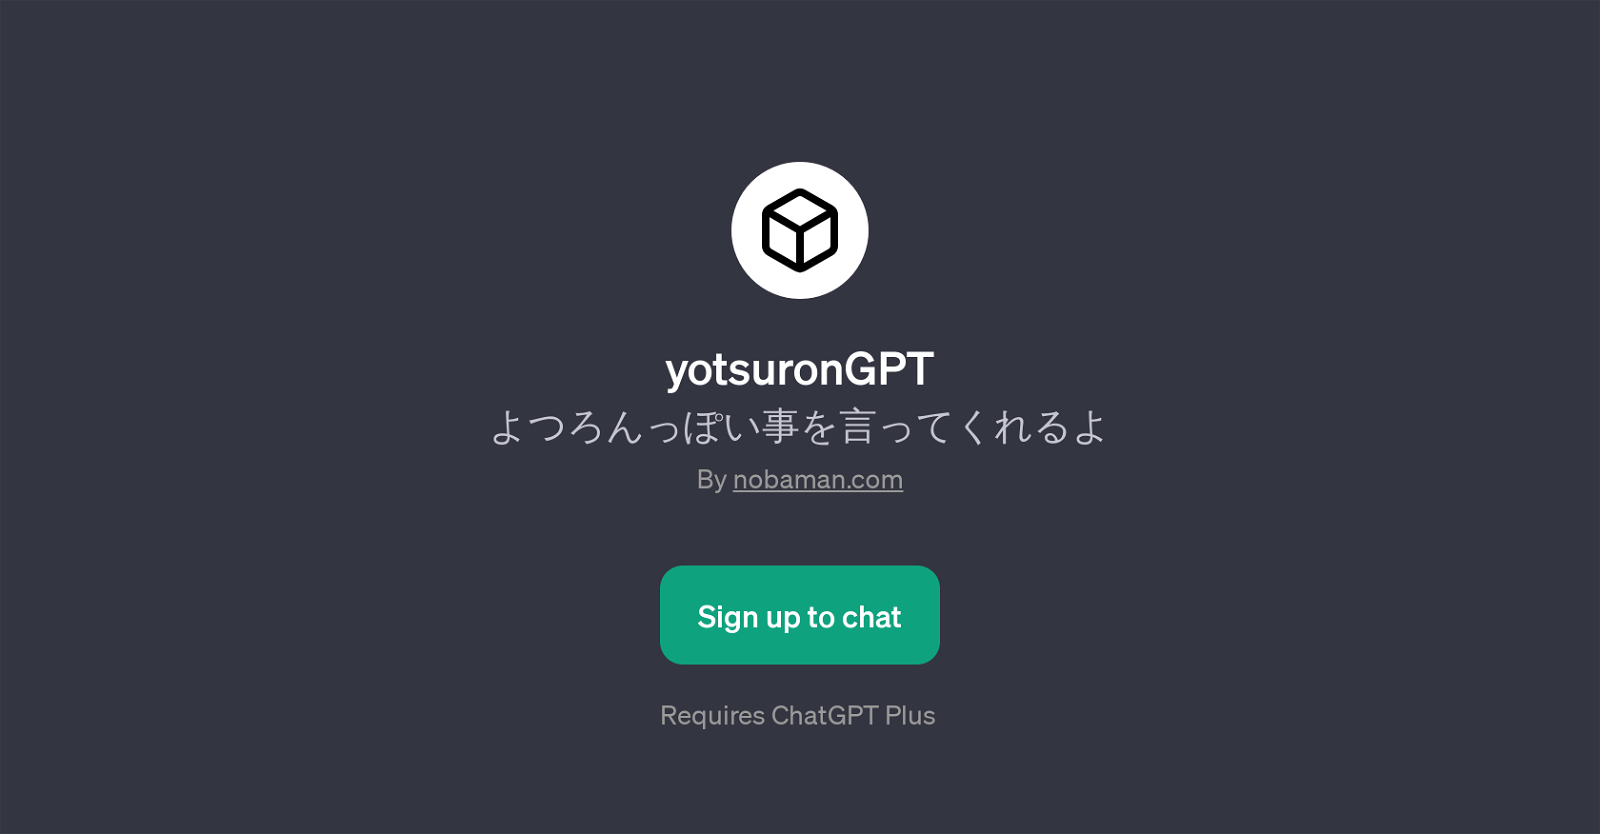 yotsuronGPT website